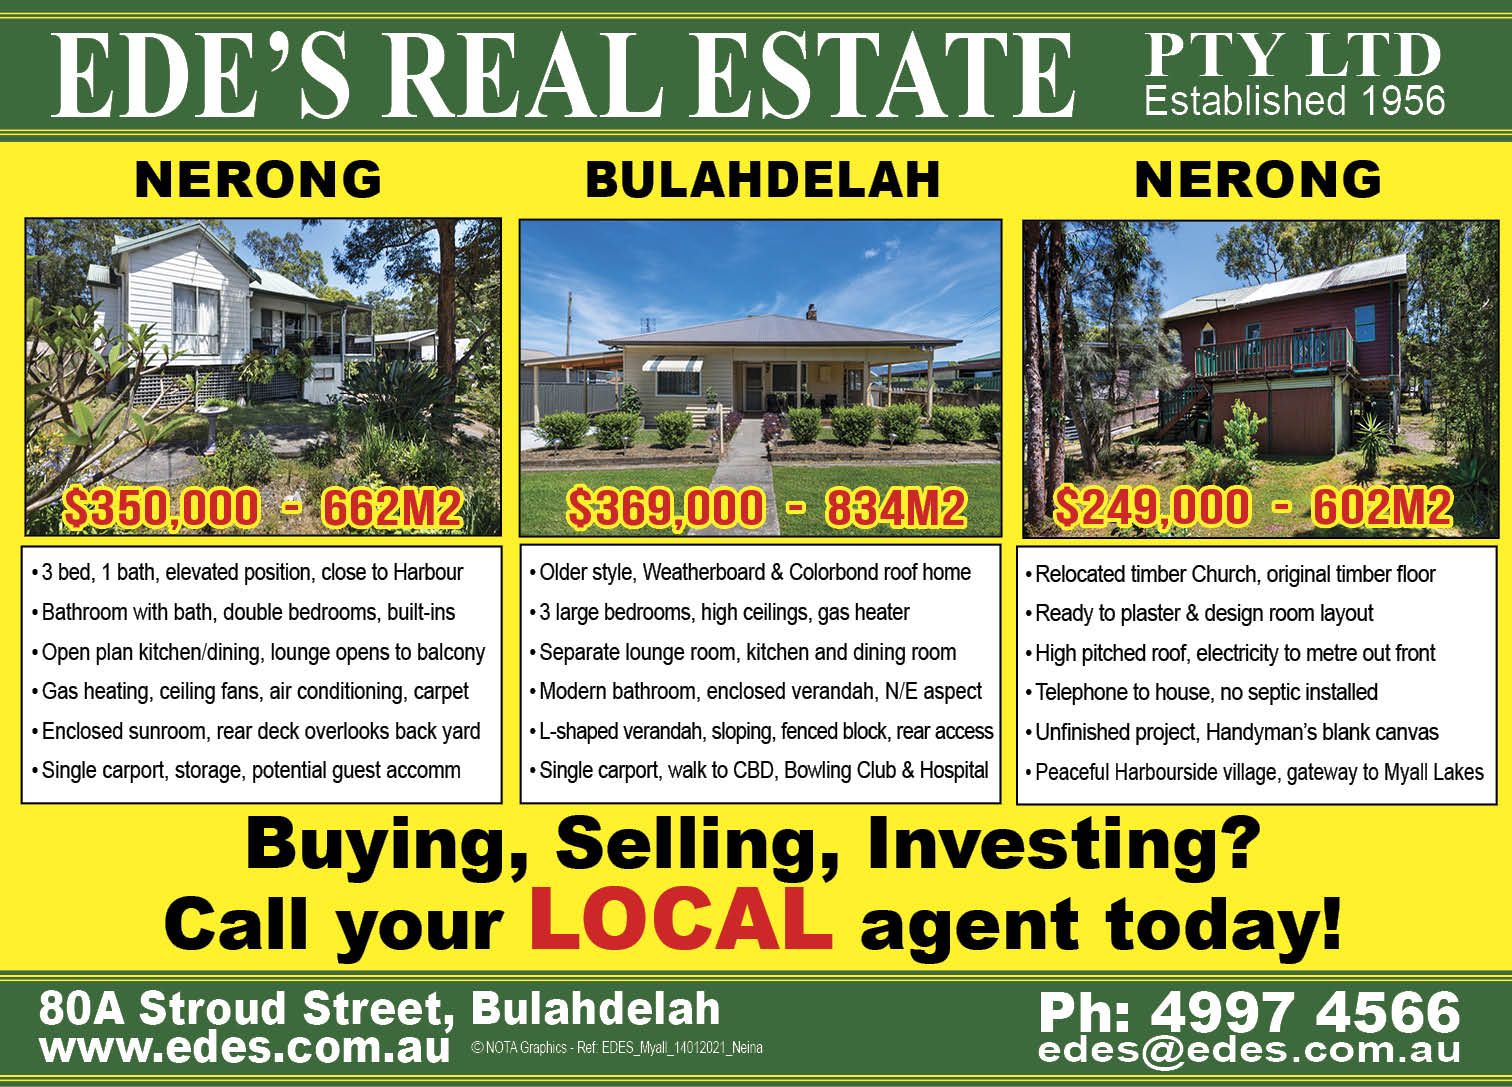 Ede's Real Estate